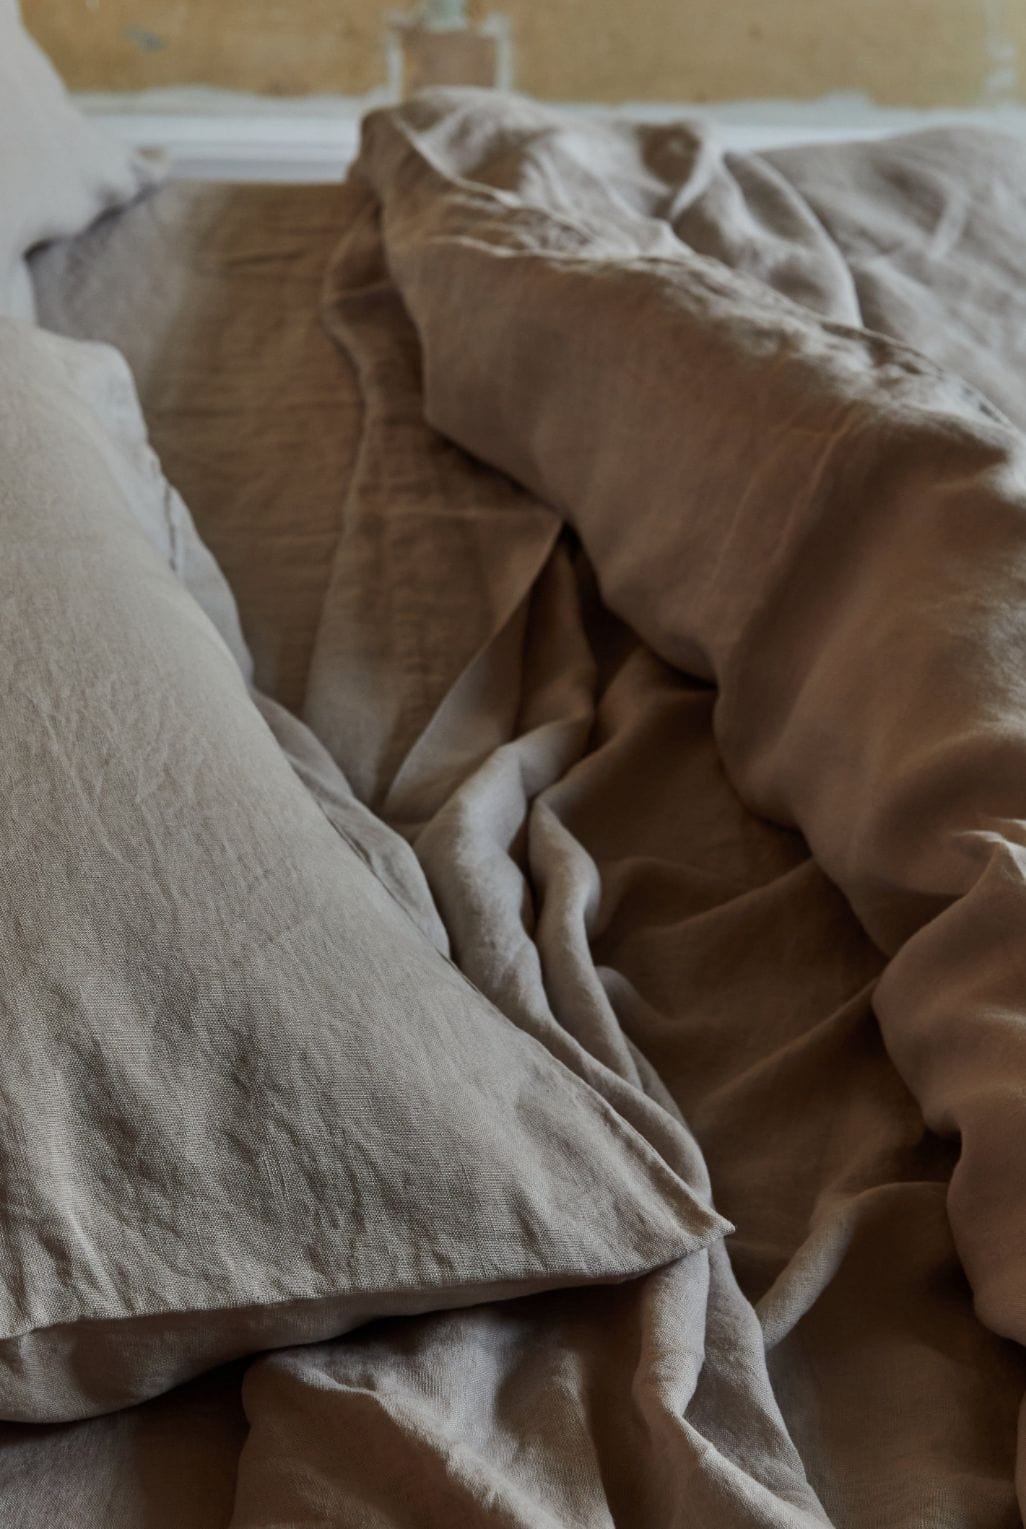 Linen Flat Sheet in Sandy Beige Custom Size Bed Sheets, Linen Bedding King, Queen  Sizes 